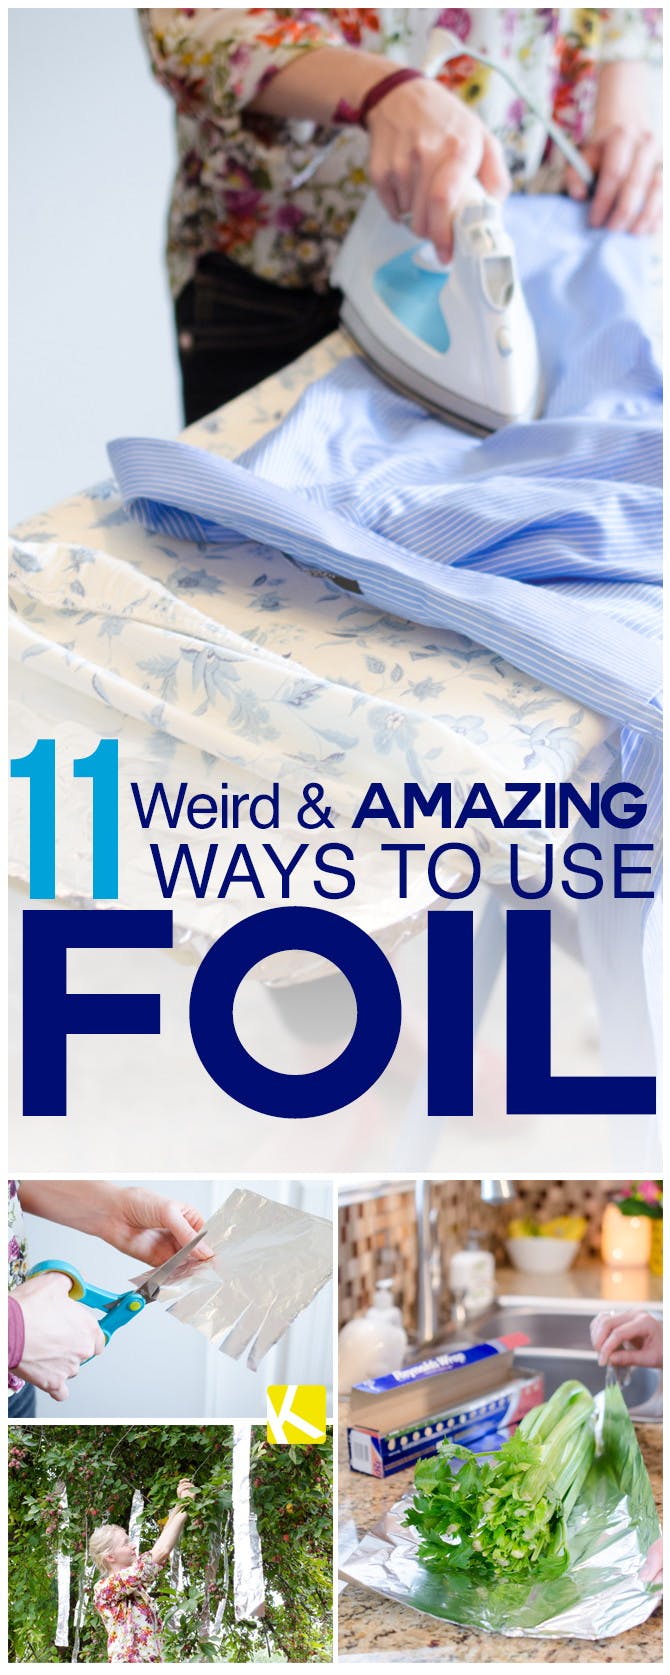 11 Weird & Amazing Ways to Use Foil